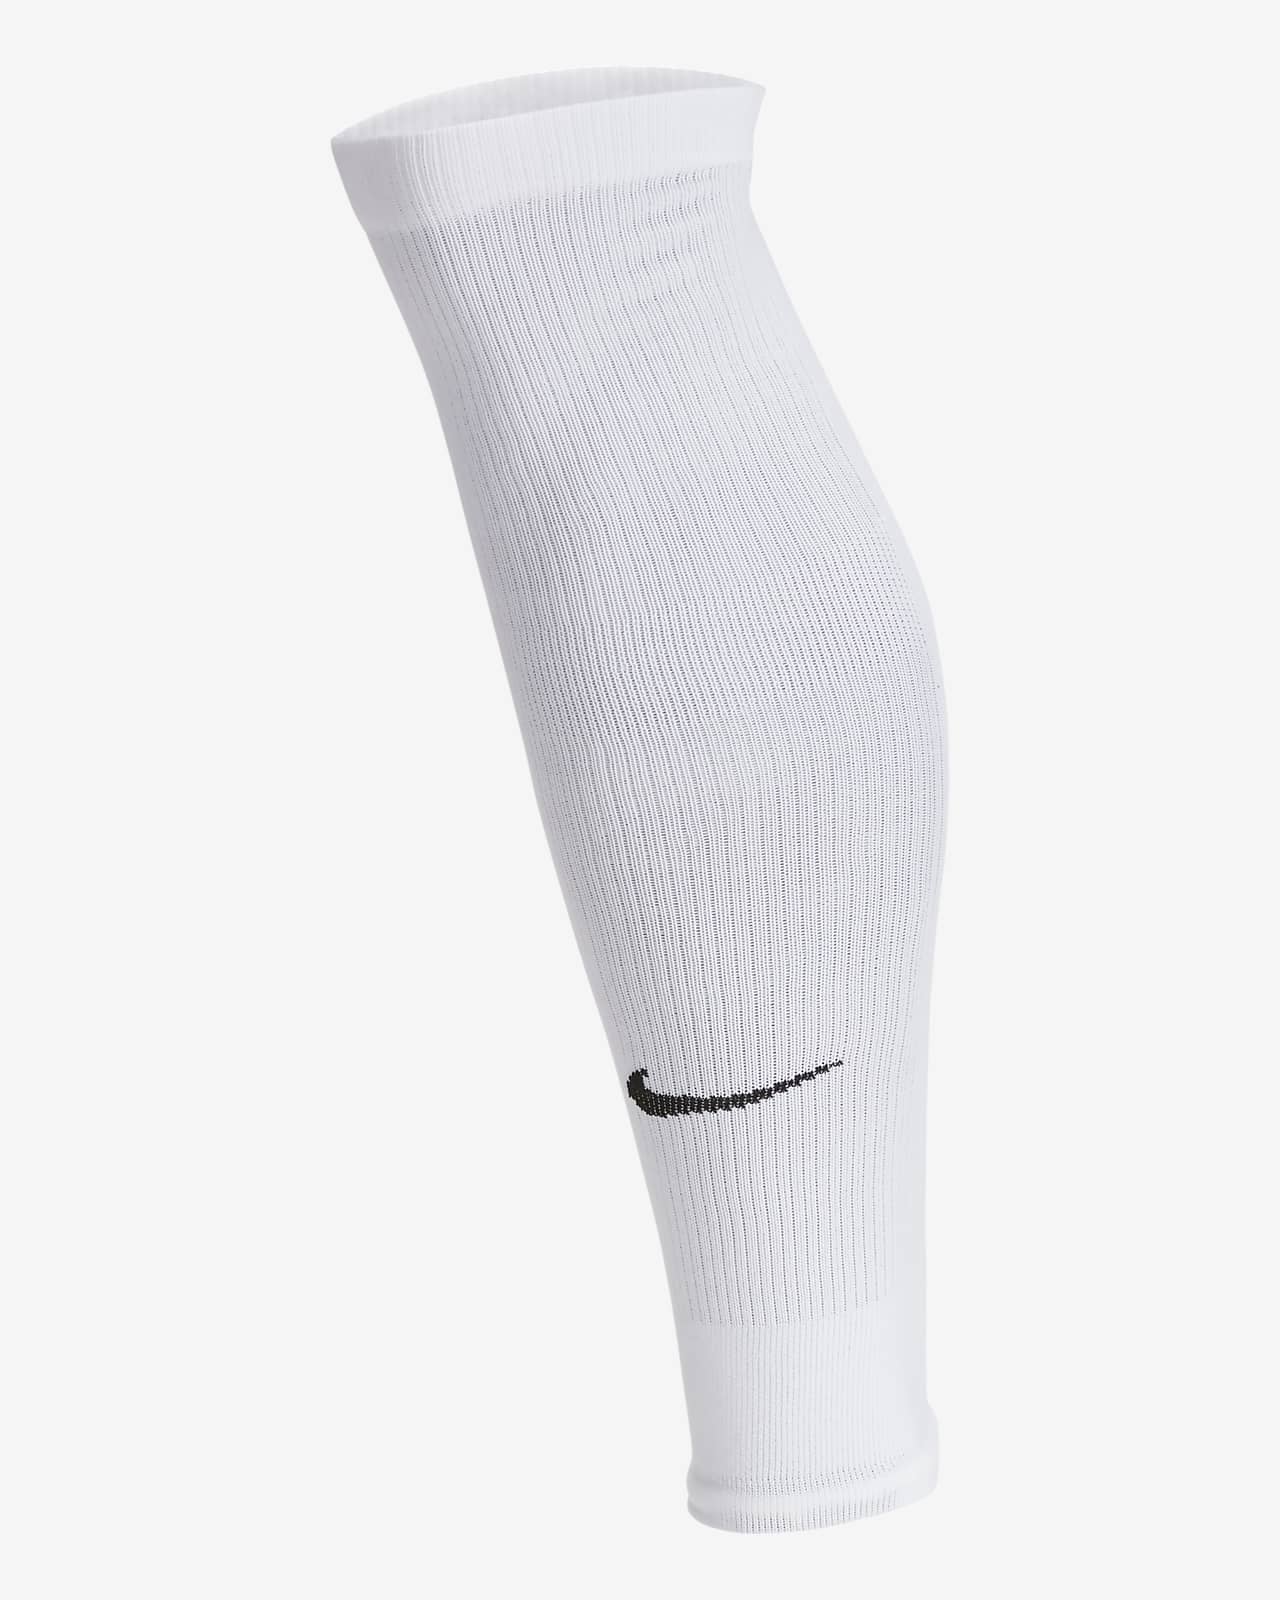 nike compression leg sleeves